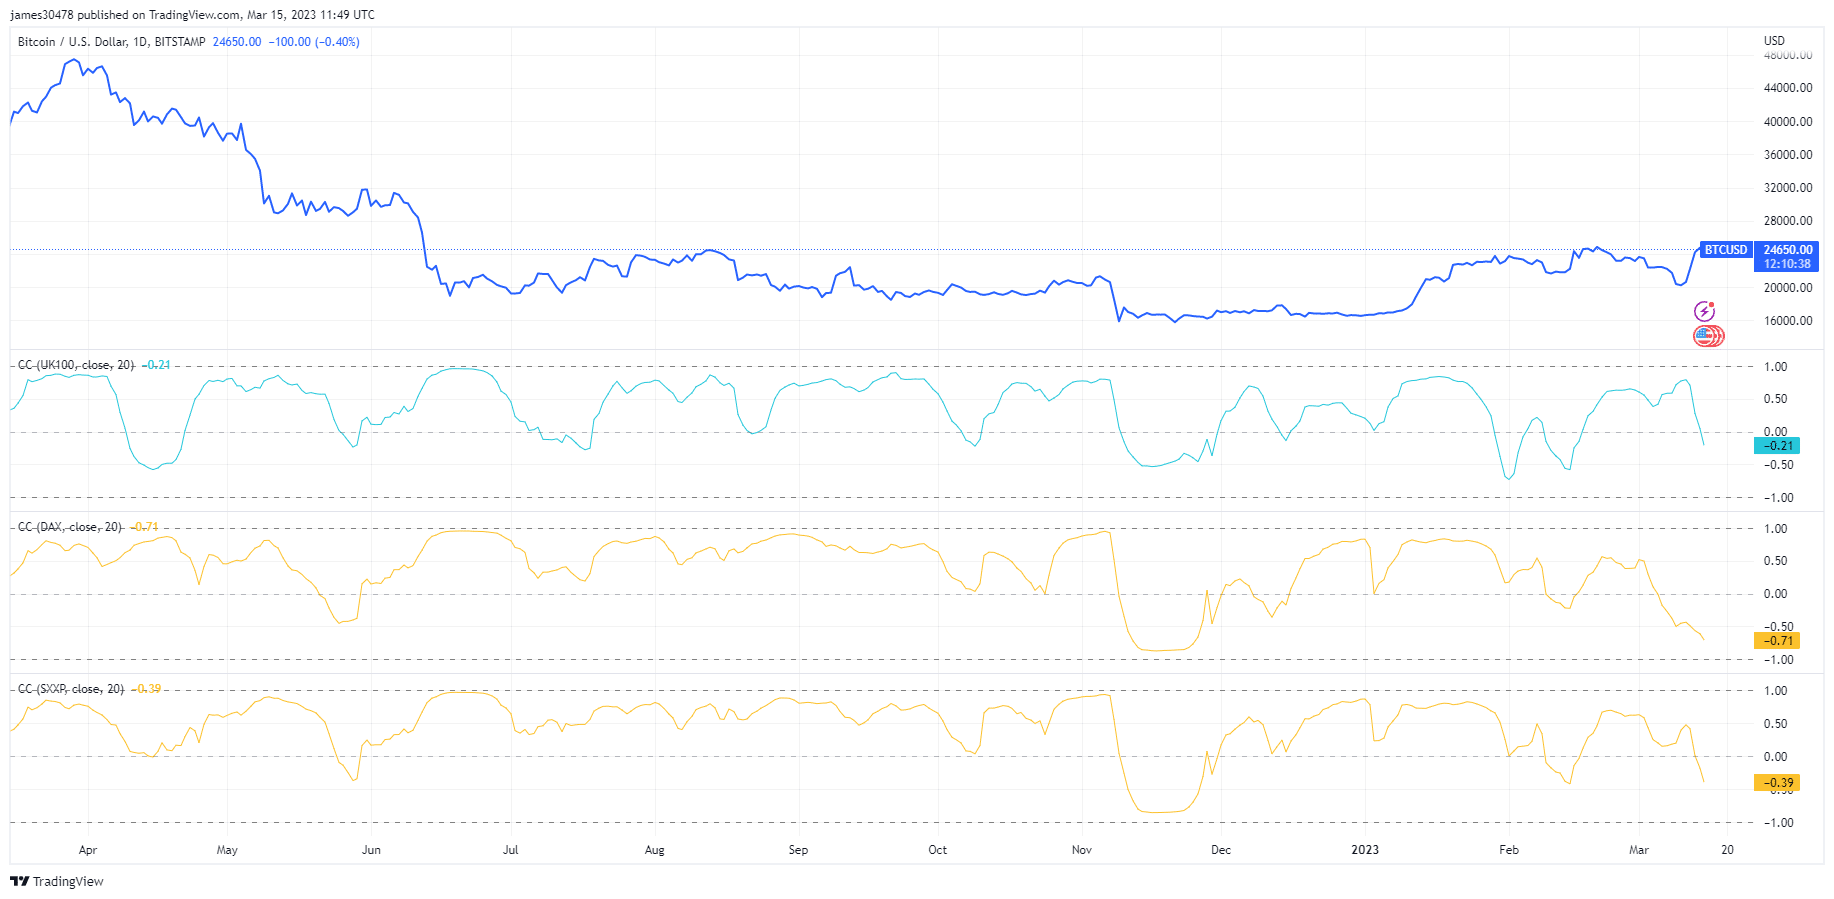 BTC correlation: (Source: Trading View)